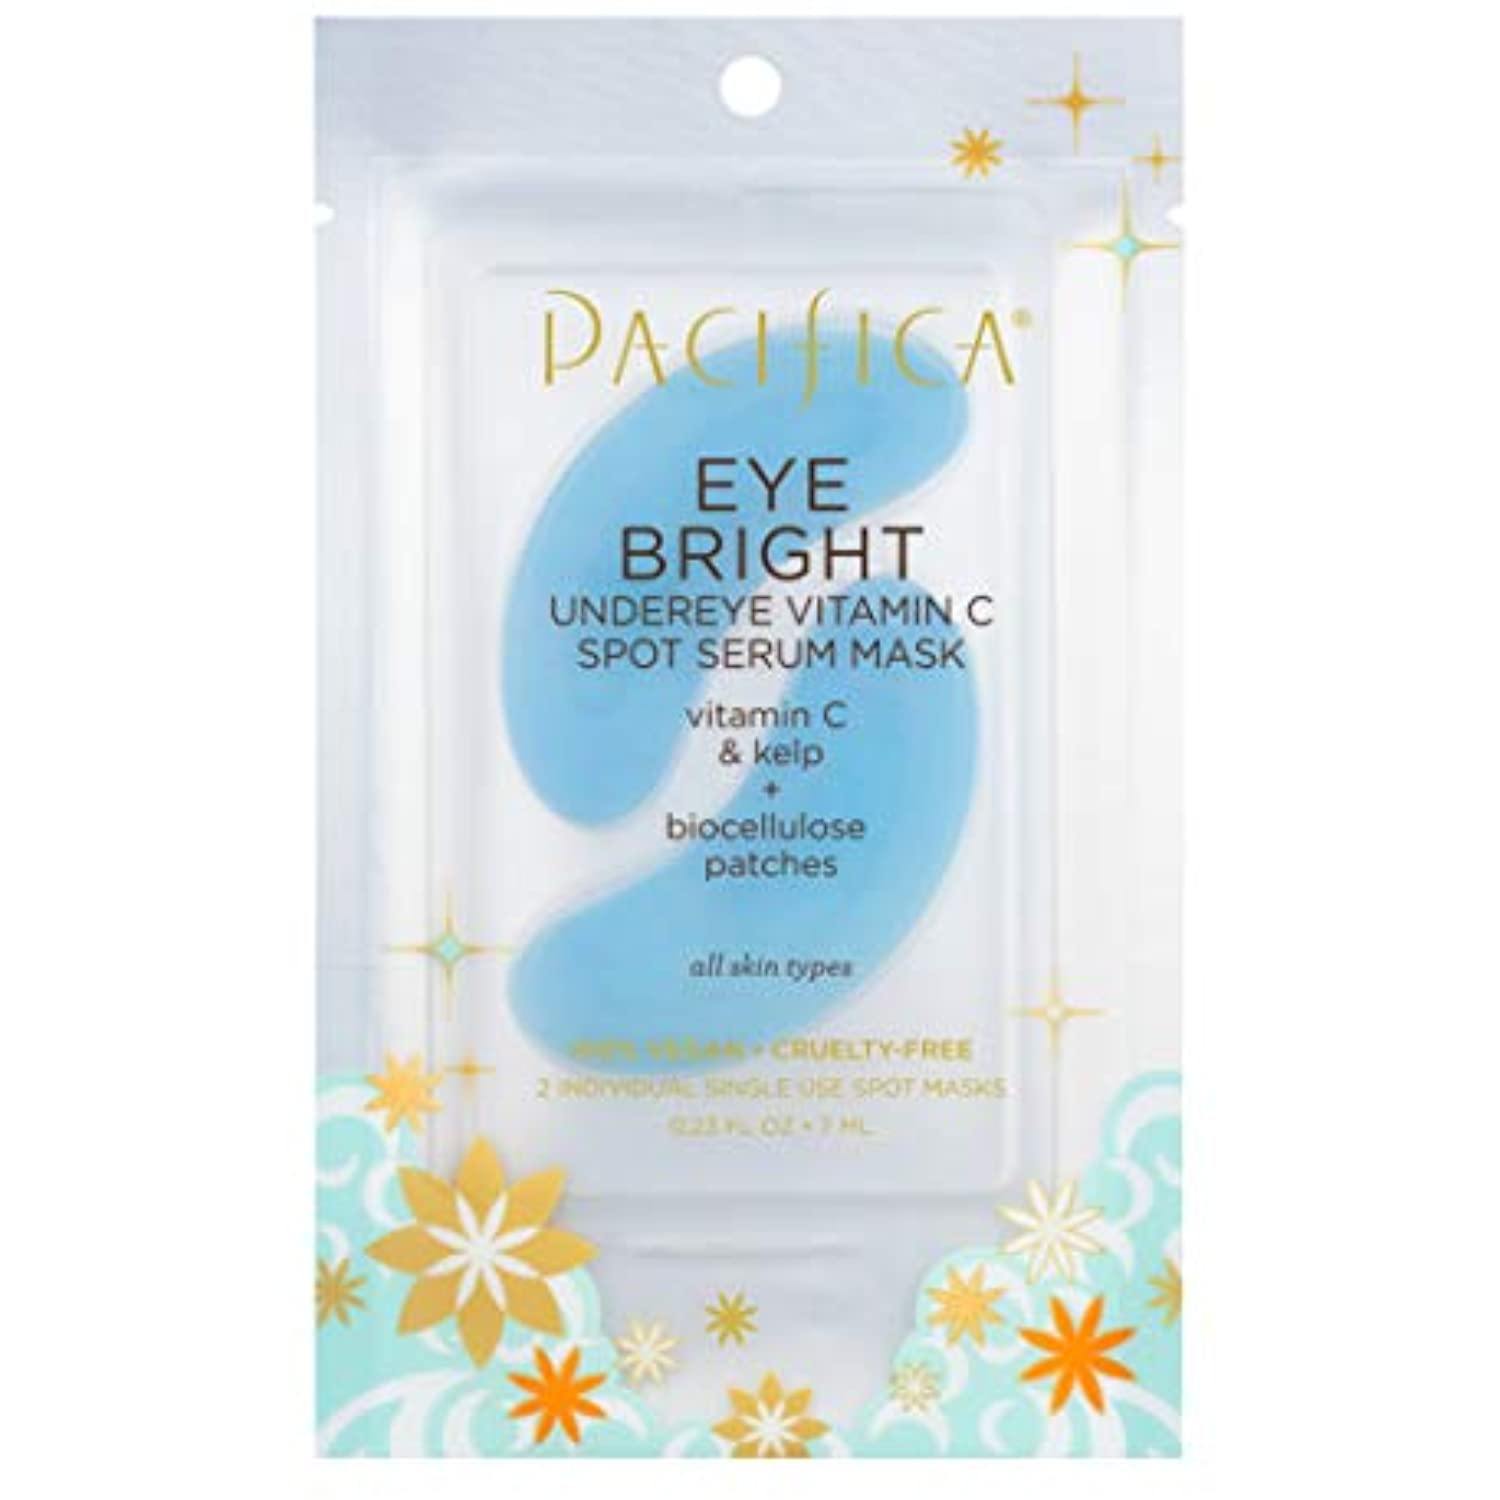 Pacifica Eye bright undereye vitamin c bio-cellulose patches, 0.23 Fl Ounce - Melville Co